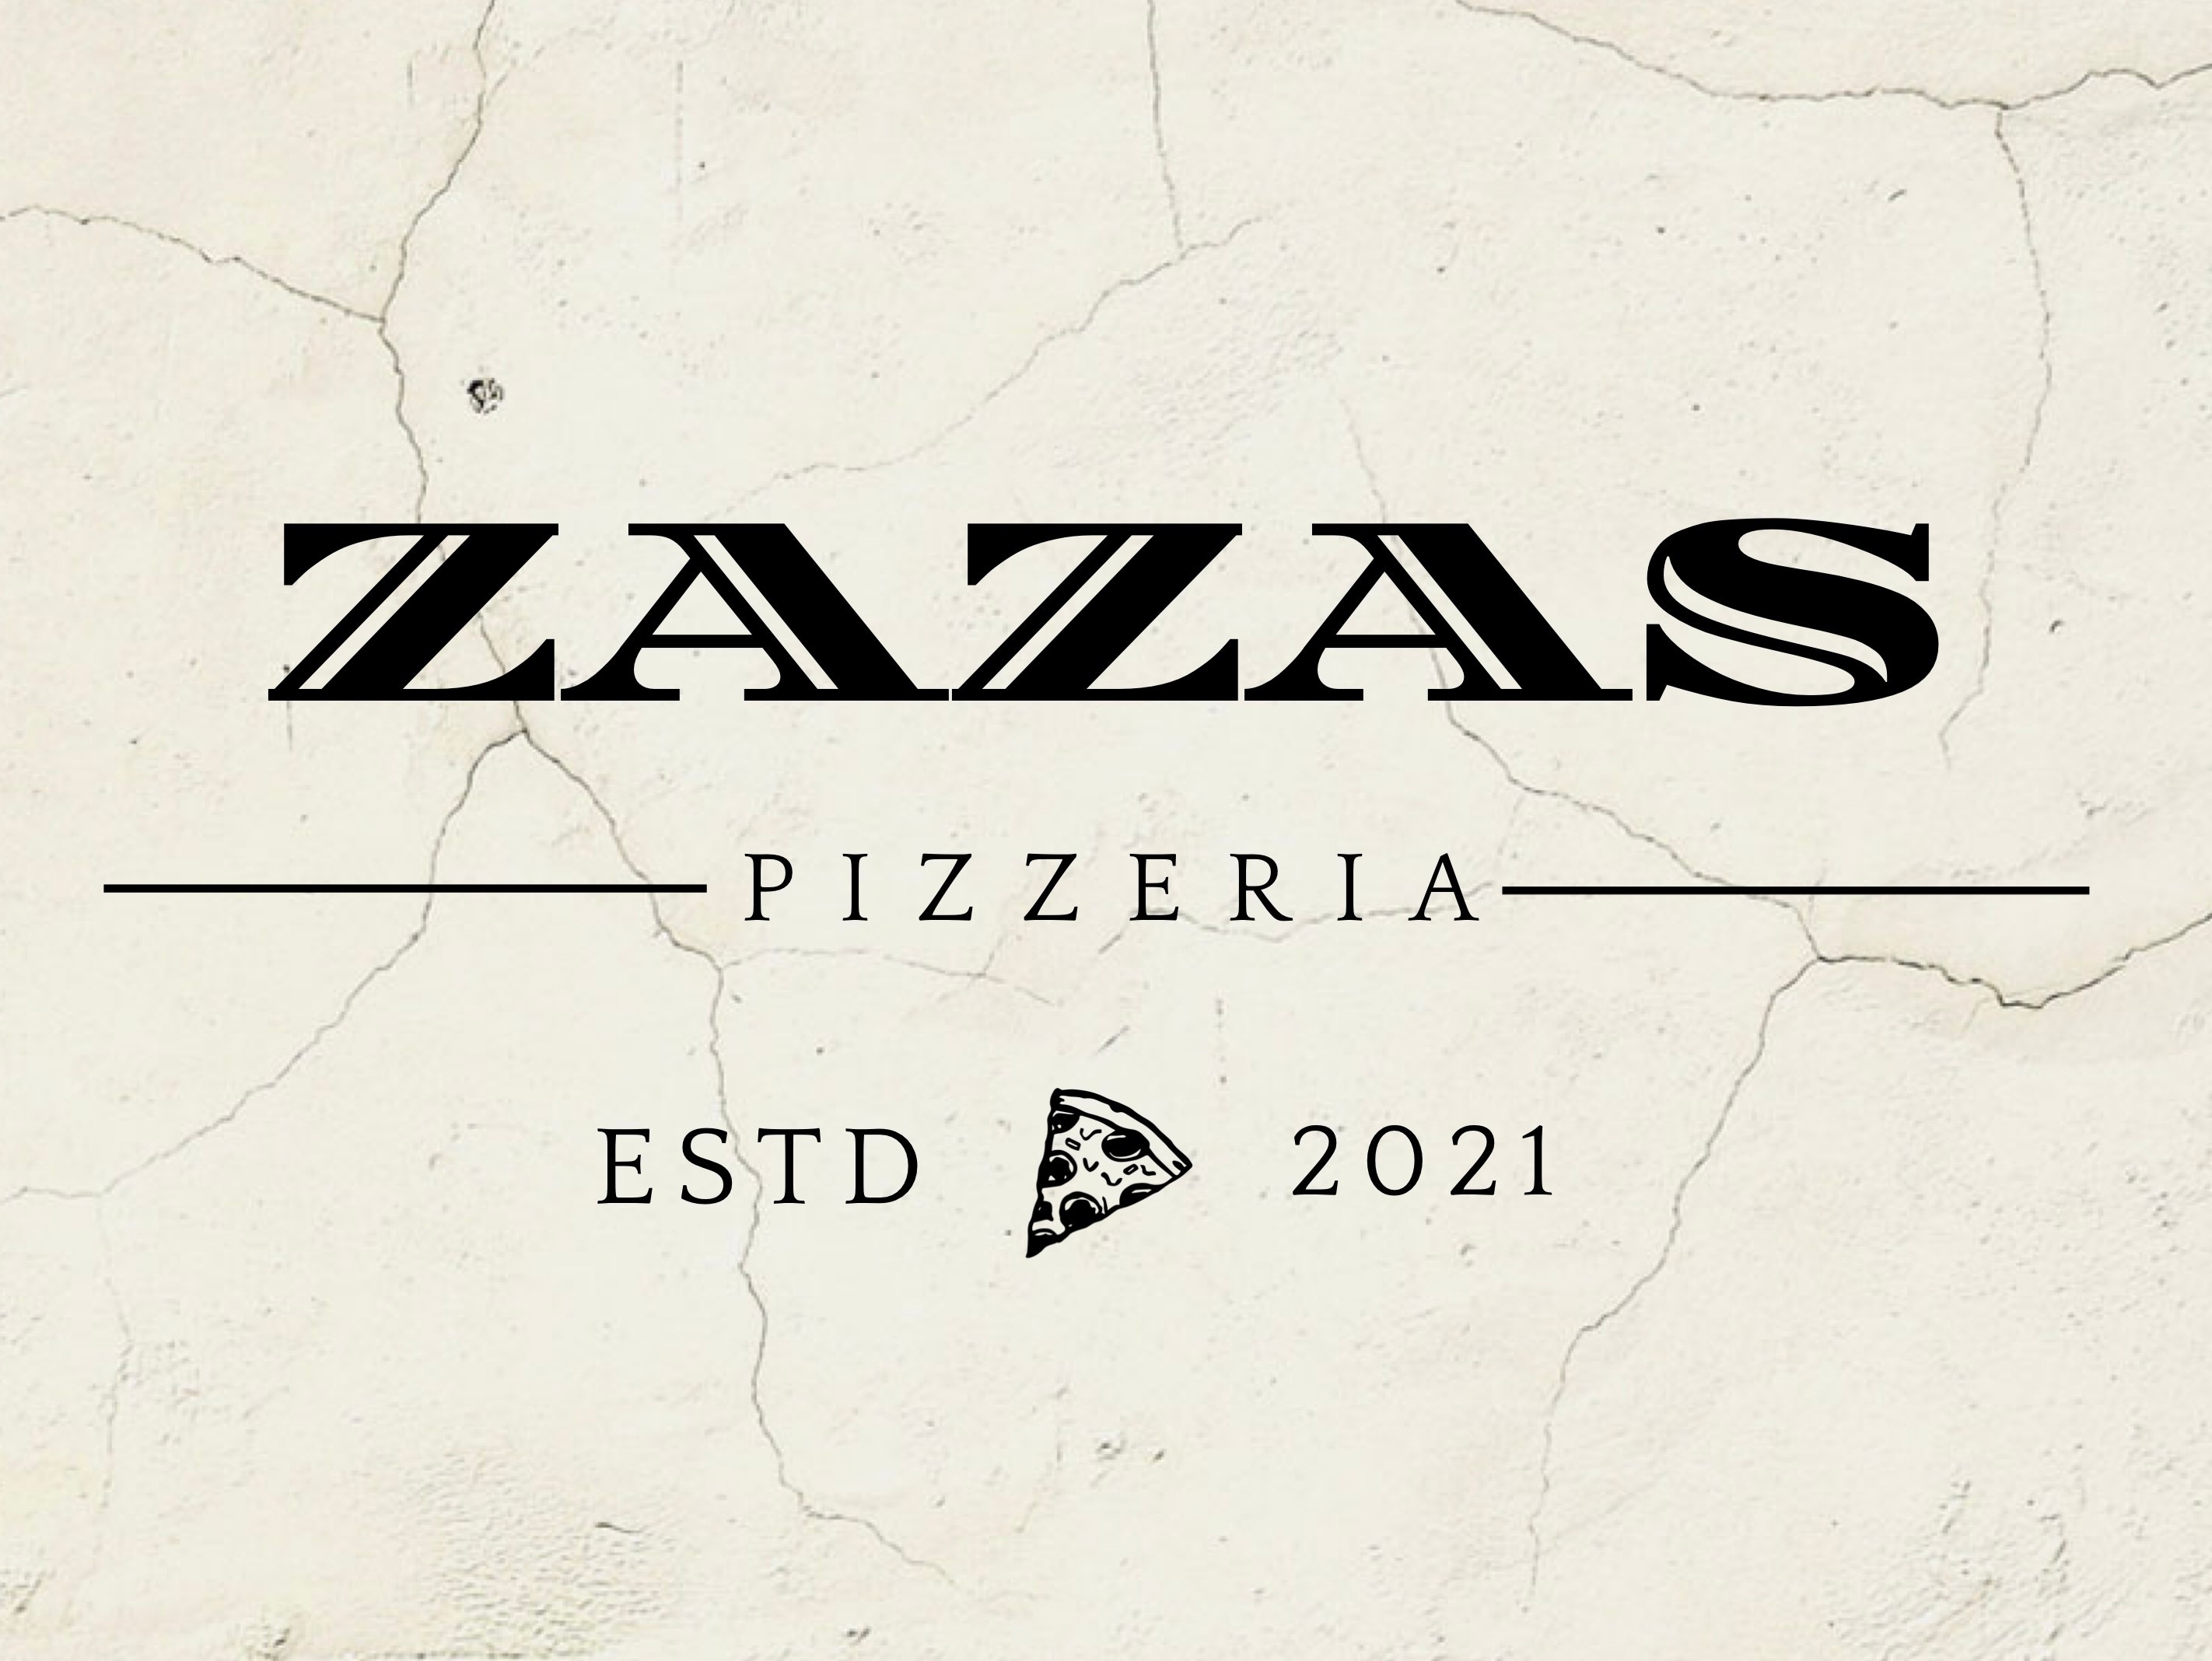 ZaZas Pizzeria